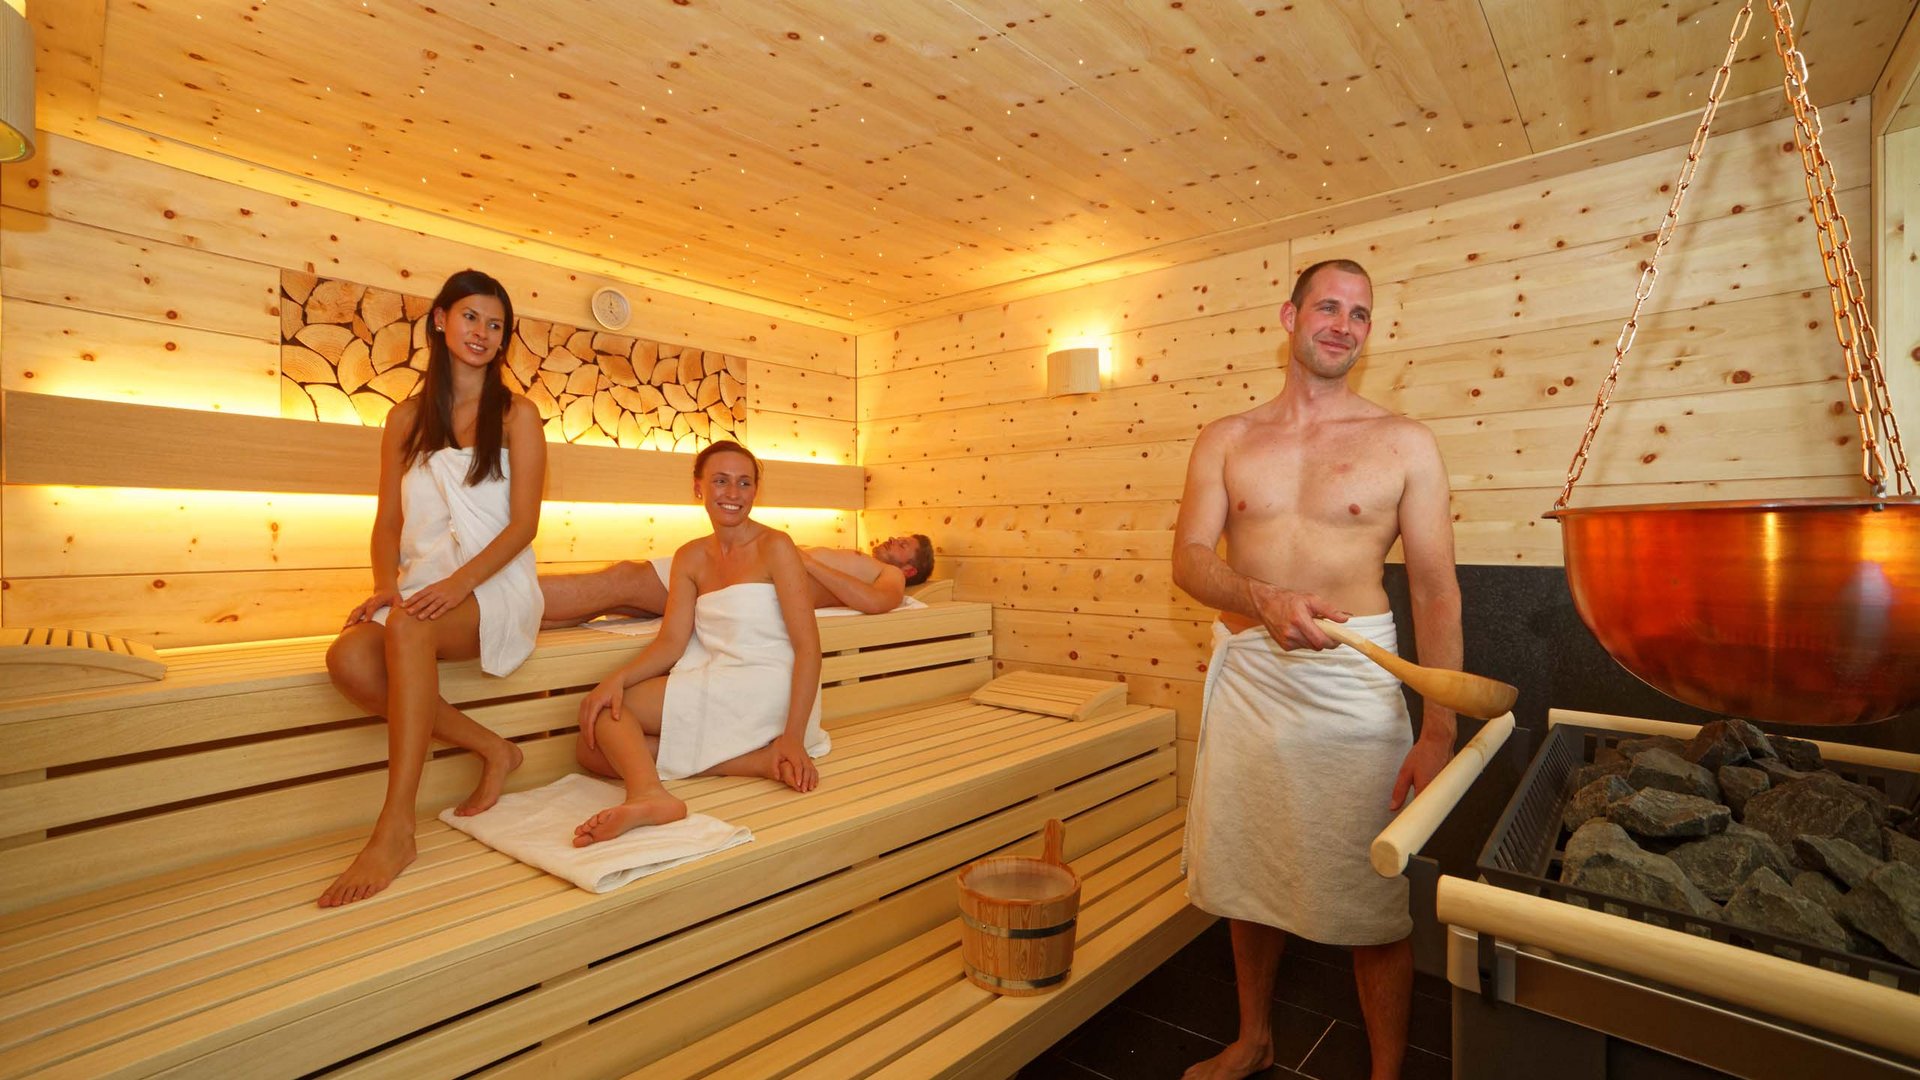 Hofbräuhaus spa hotel: dress-on saunas